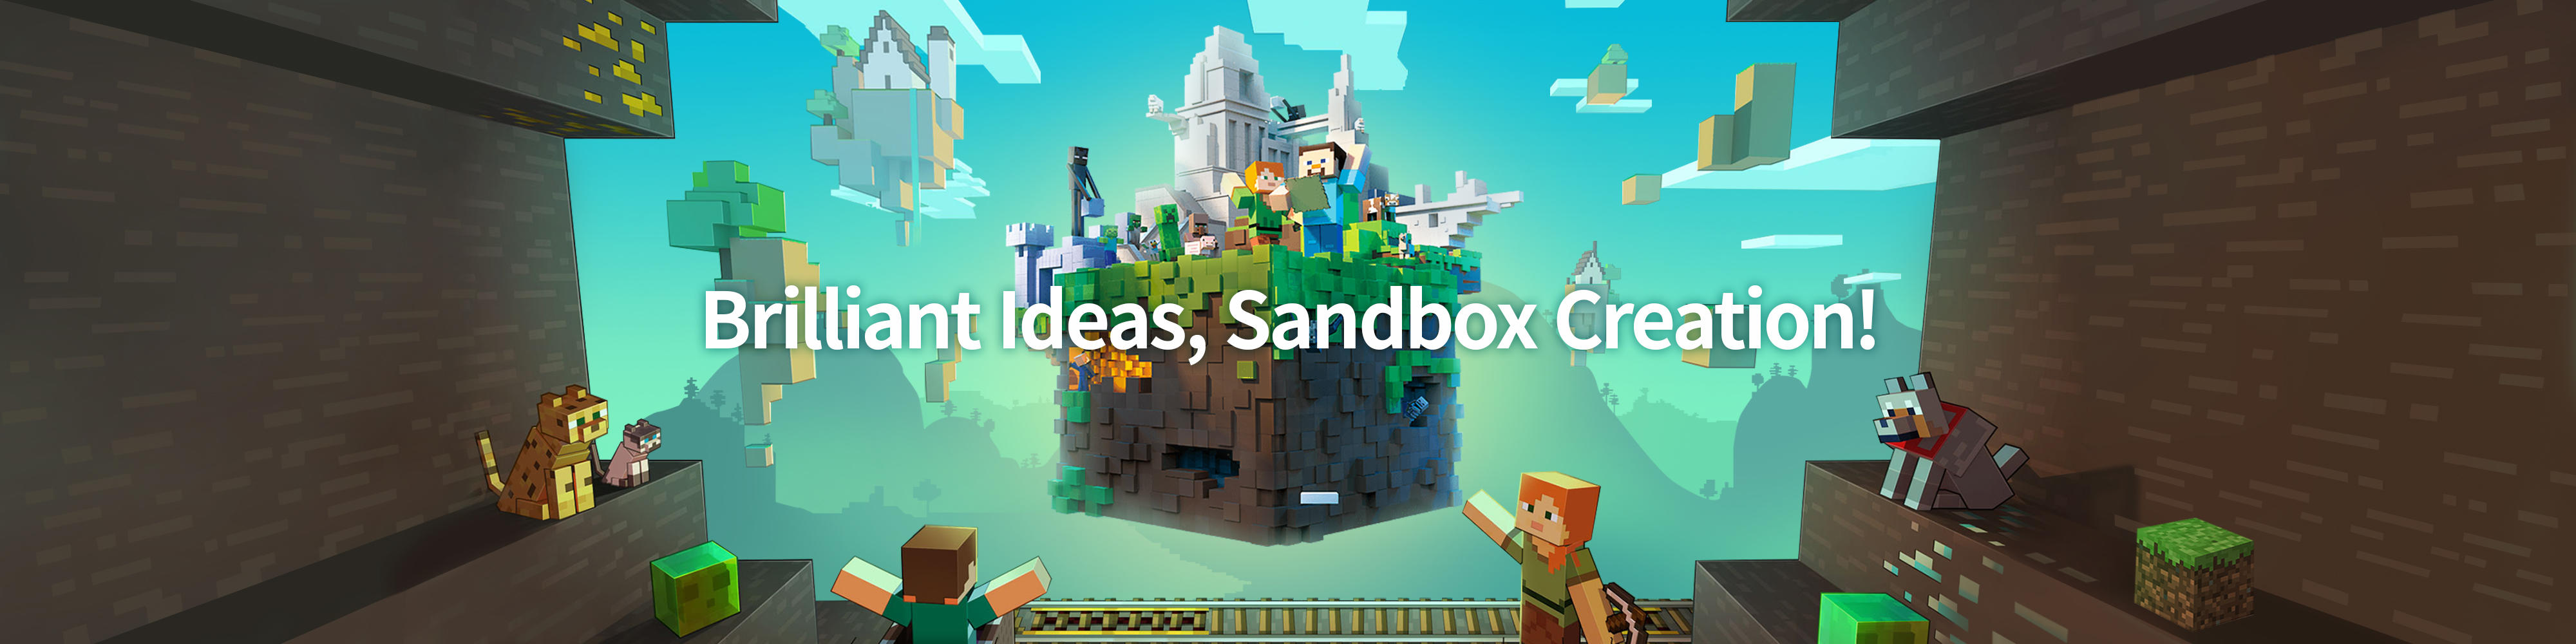 Brilliant Ideas Sandbox Creation Moments Taptap - sandbox ideas roblox